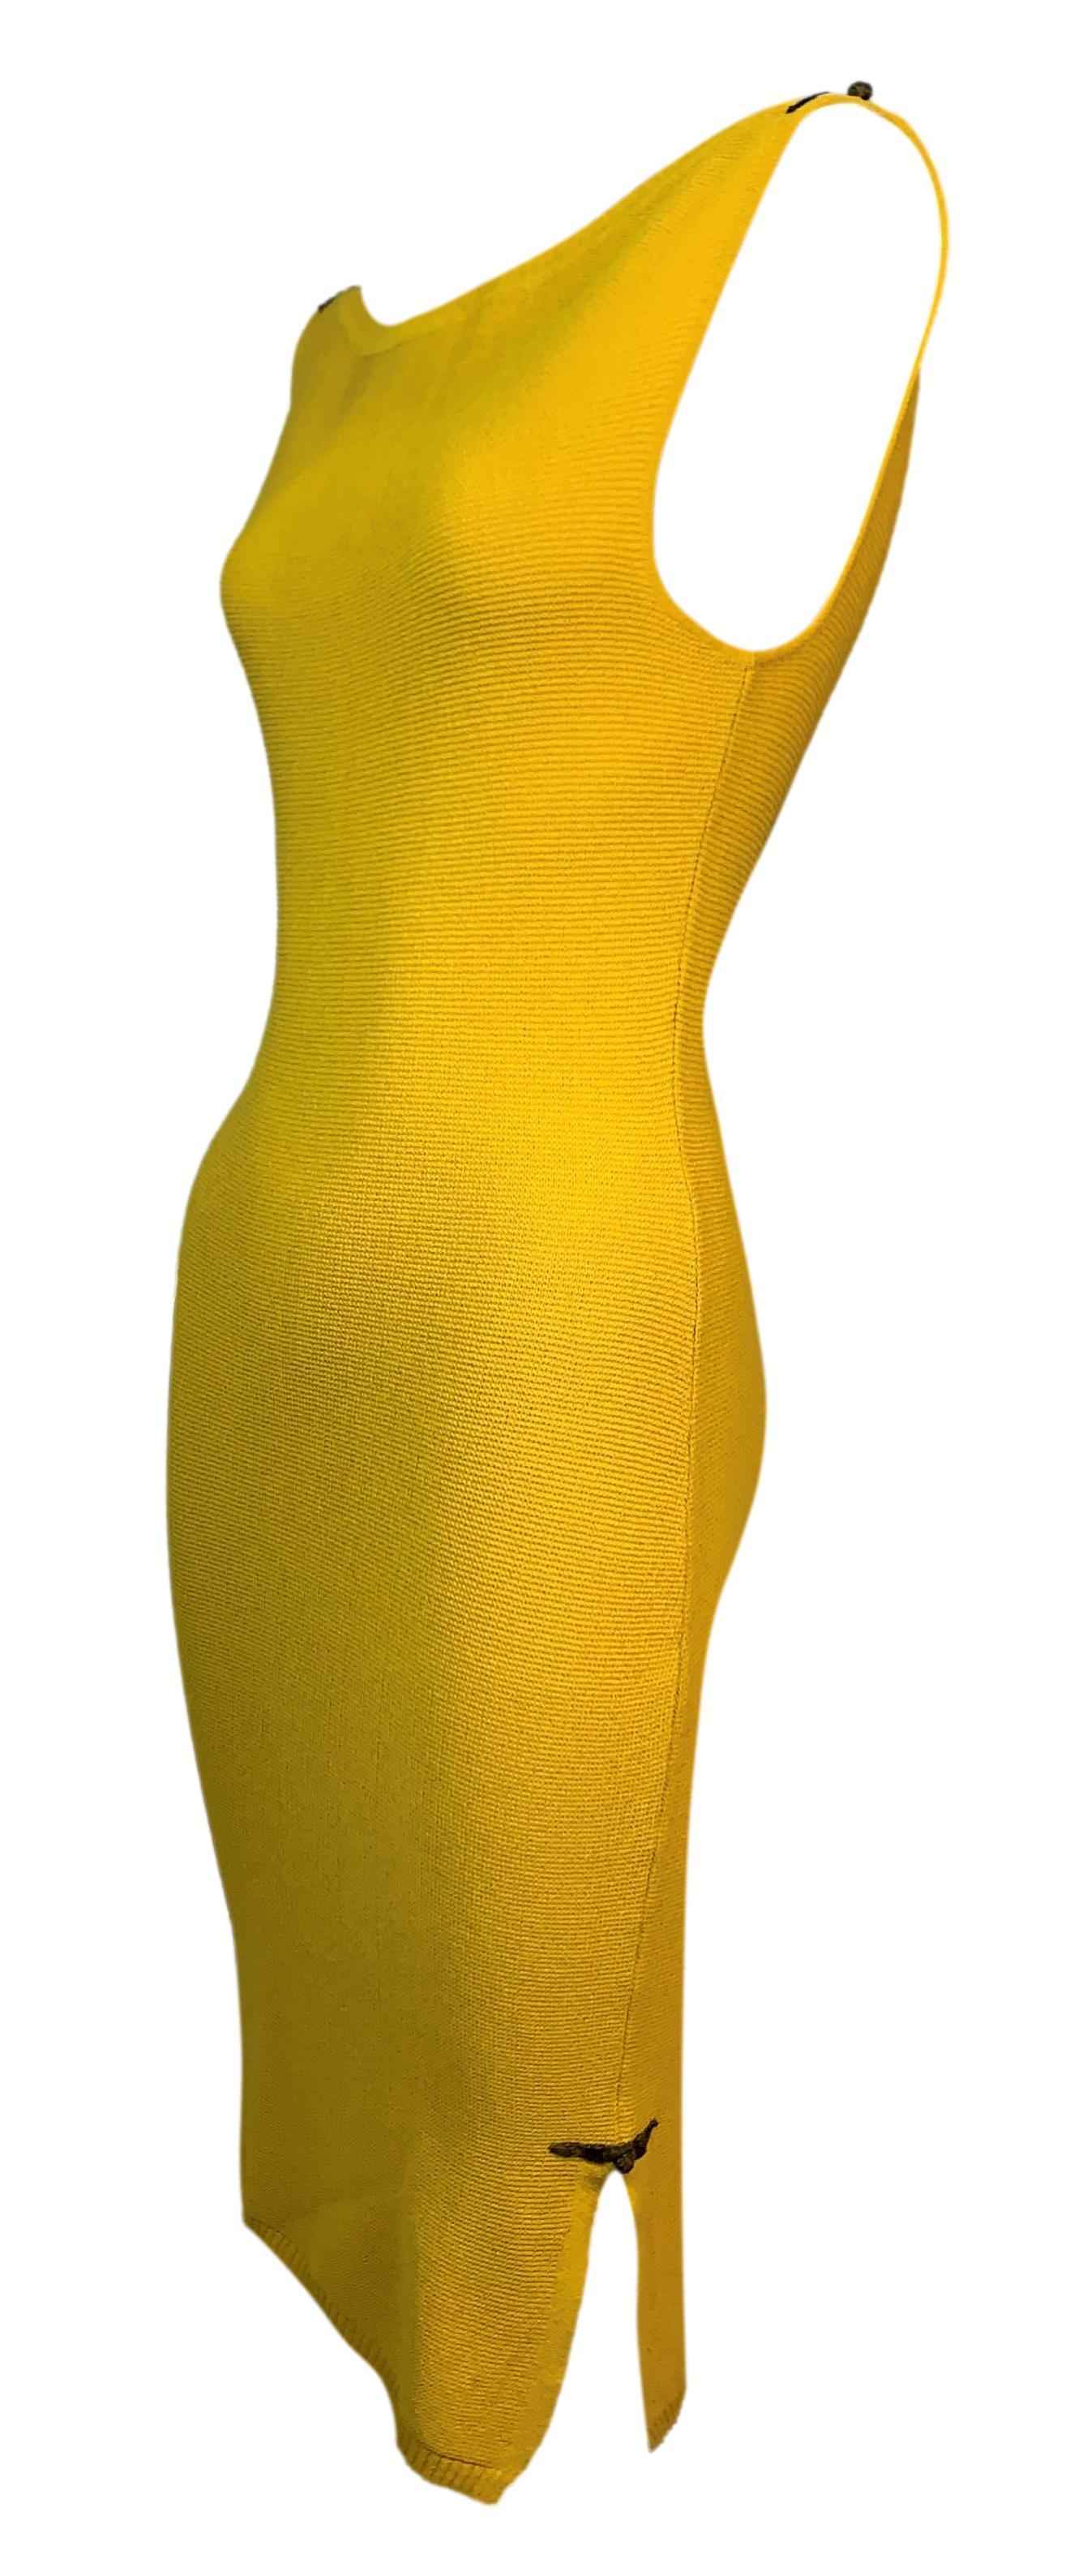 S/S 1999 Christian Dior John Galliano Yellow Marigold Knit Bodycon Dress In Good Condition In Yukon, OK